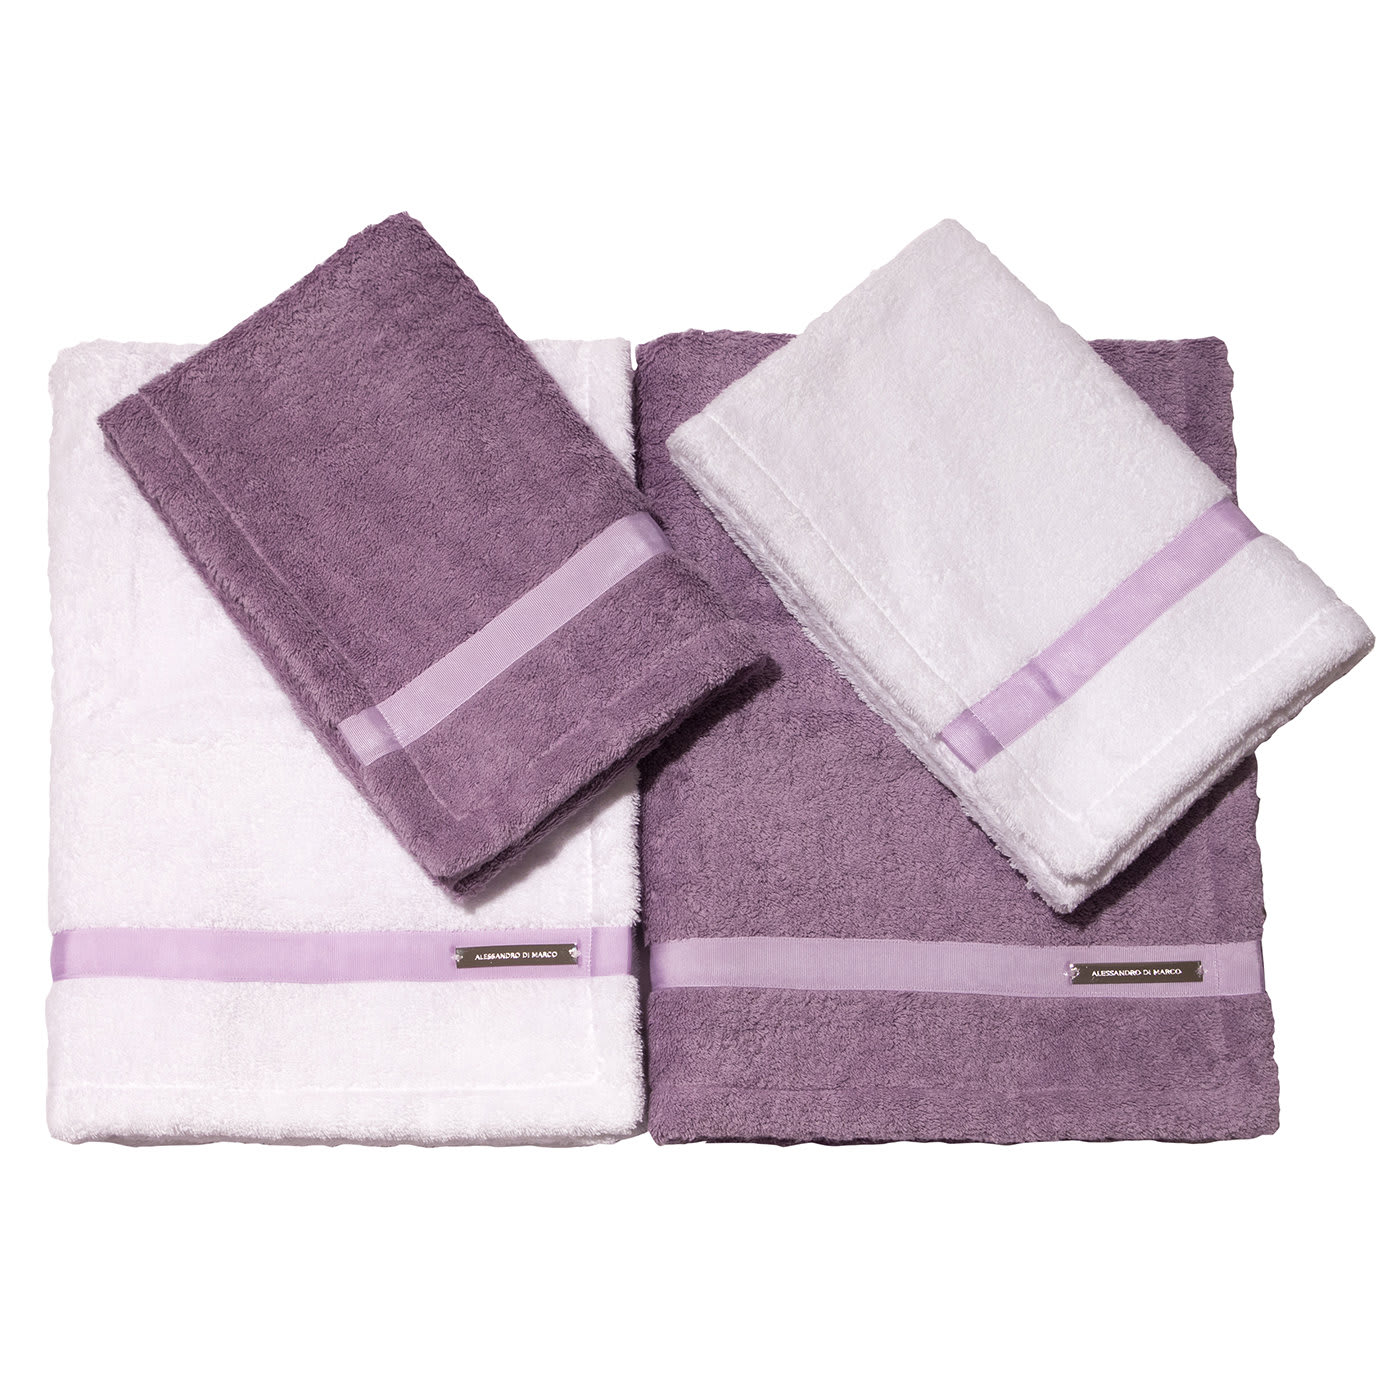 Large Bath Towel Set - Lilac - Alessandro Di Marco